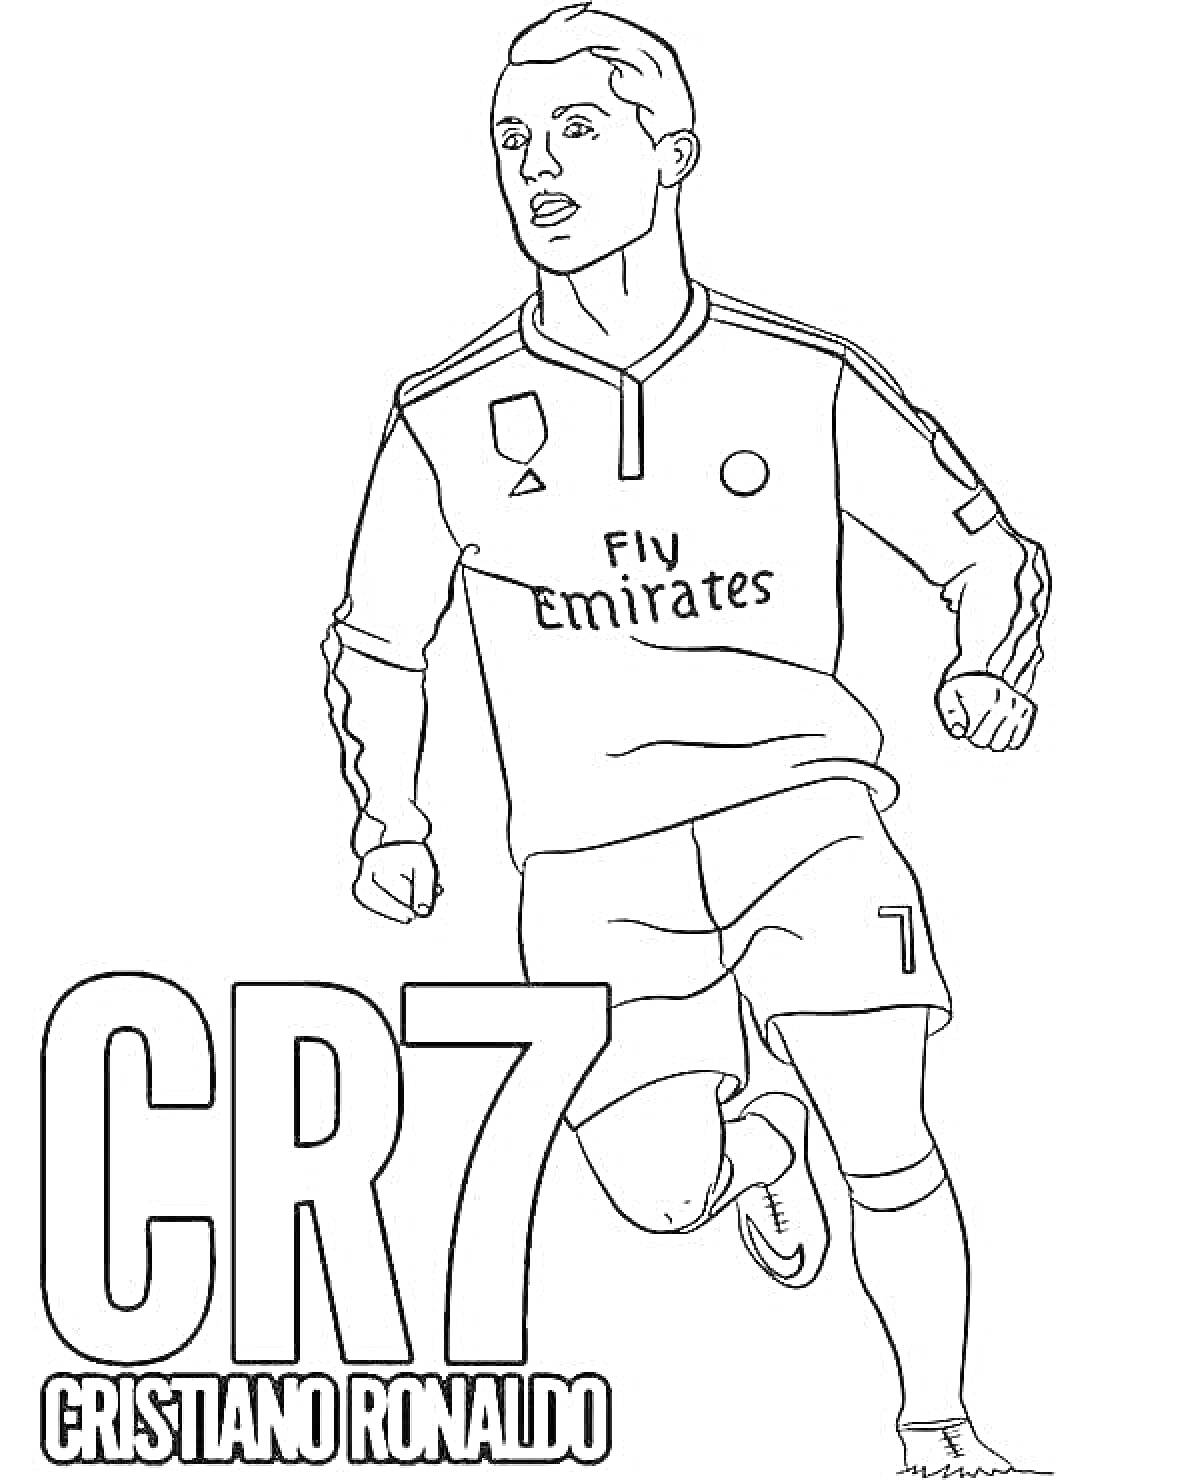 Раскраска Футболист в форме с надписями CR7 и Cristiano Ronaldo